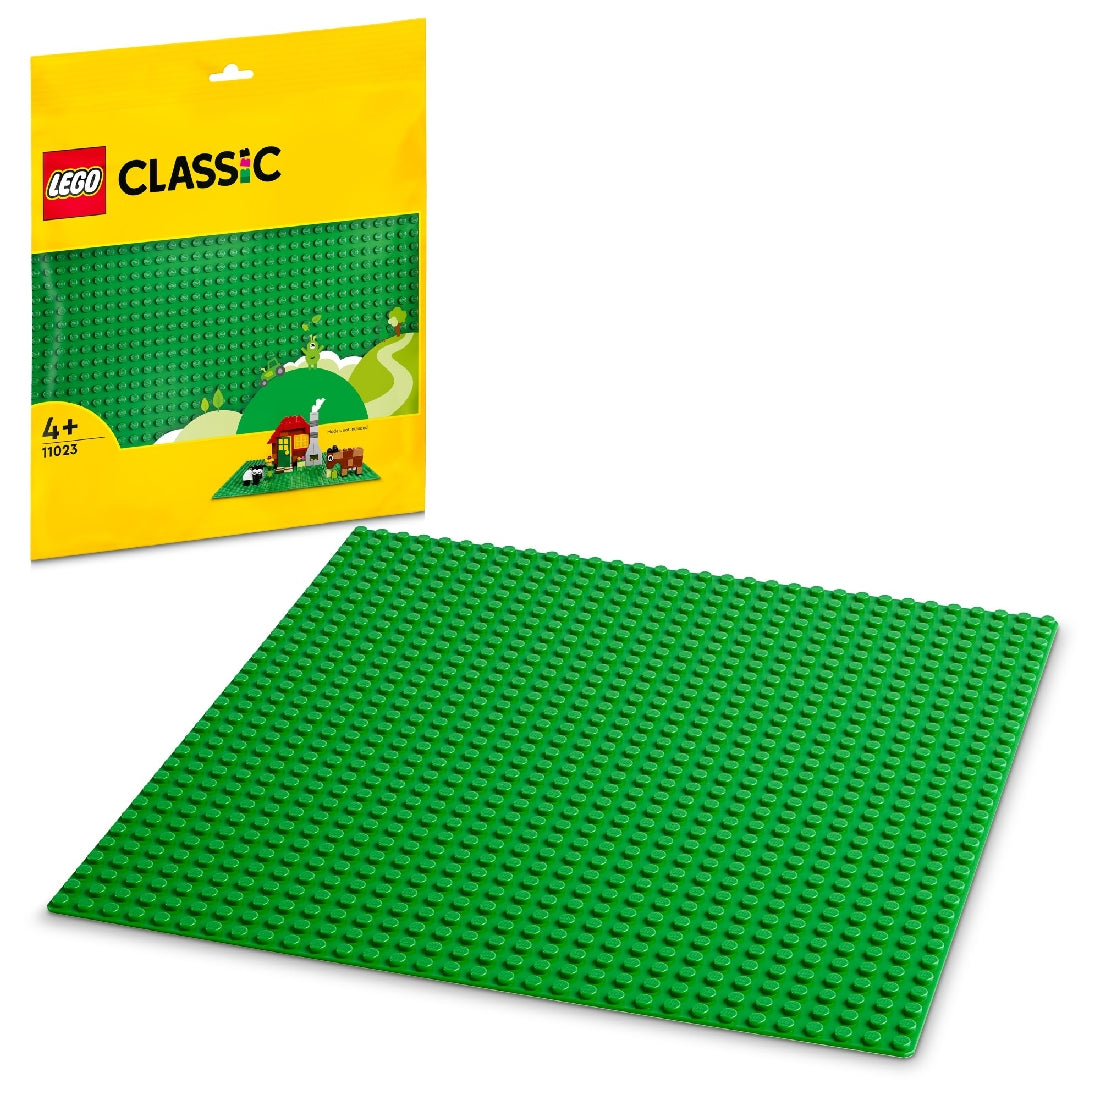 LEGO CLASSIC GREEN BASEPLATE 11023 AGE:4+